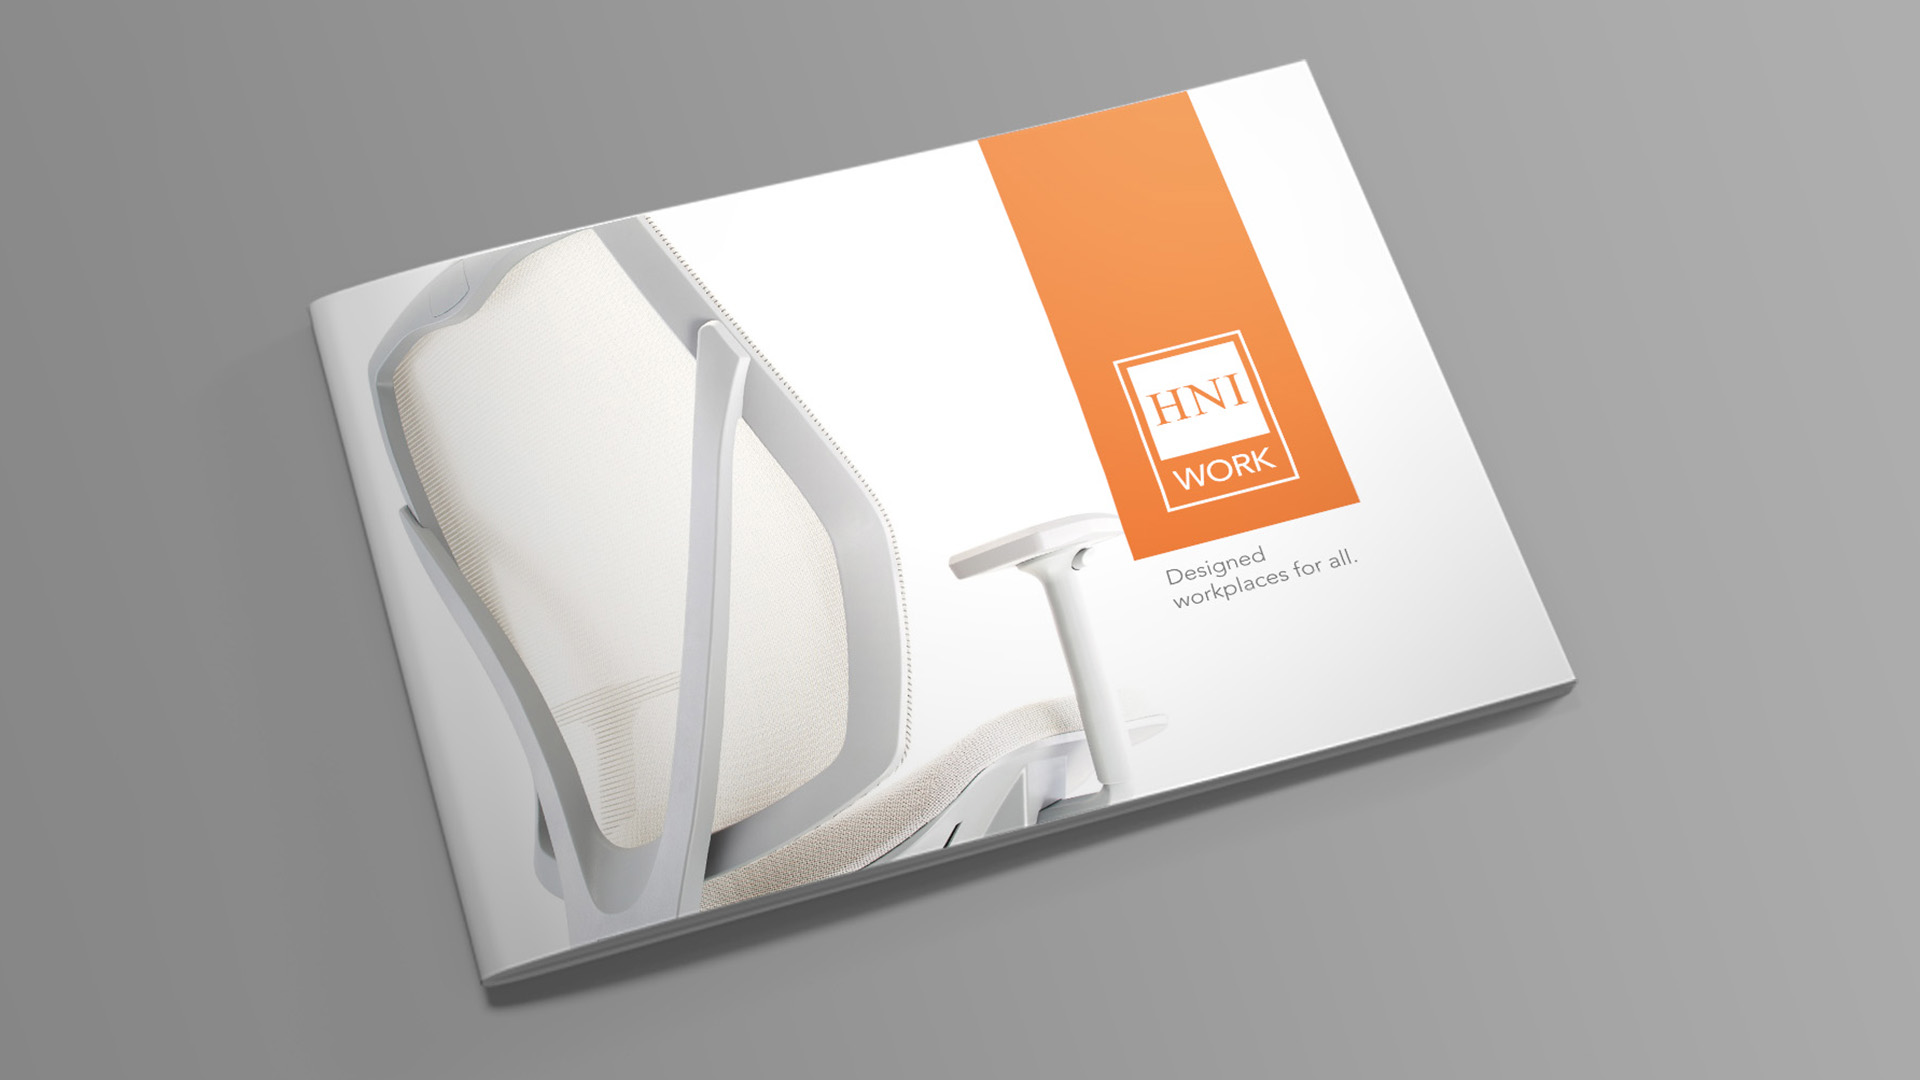 D2 Studio 市場營銷策劃, 品牌策劃與平面設計公司的香港及廣州中國團隊為furniture brand安排平面設計與企業刊物設計graphic design and brochure design 3